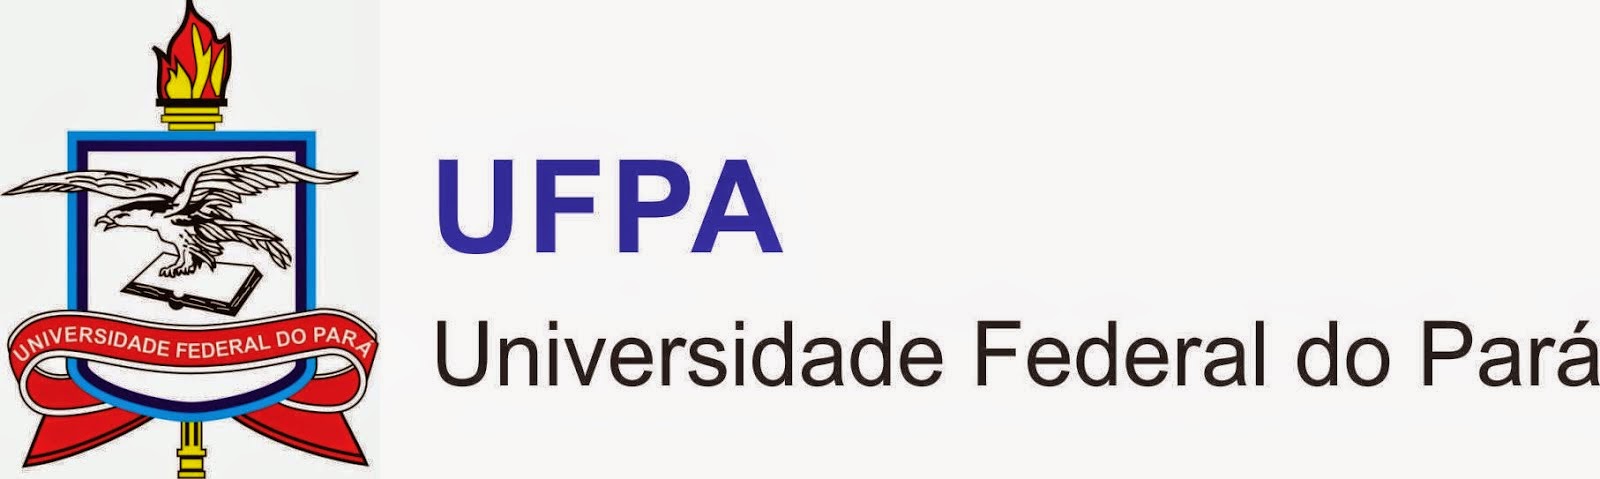 Visite o portal da UFPA